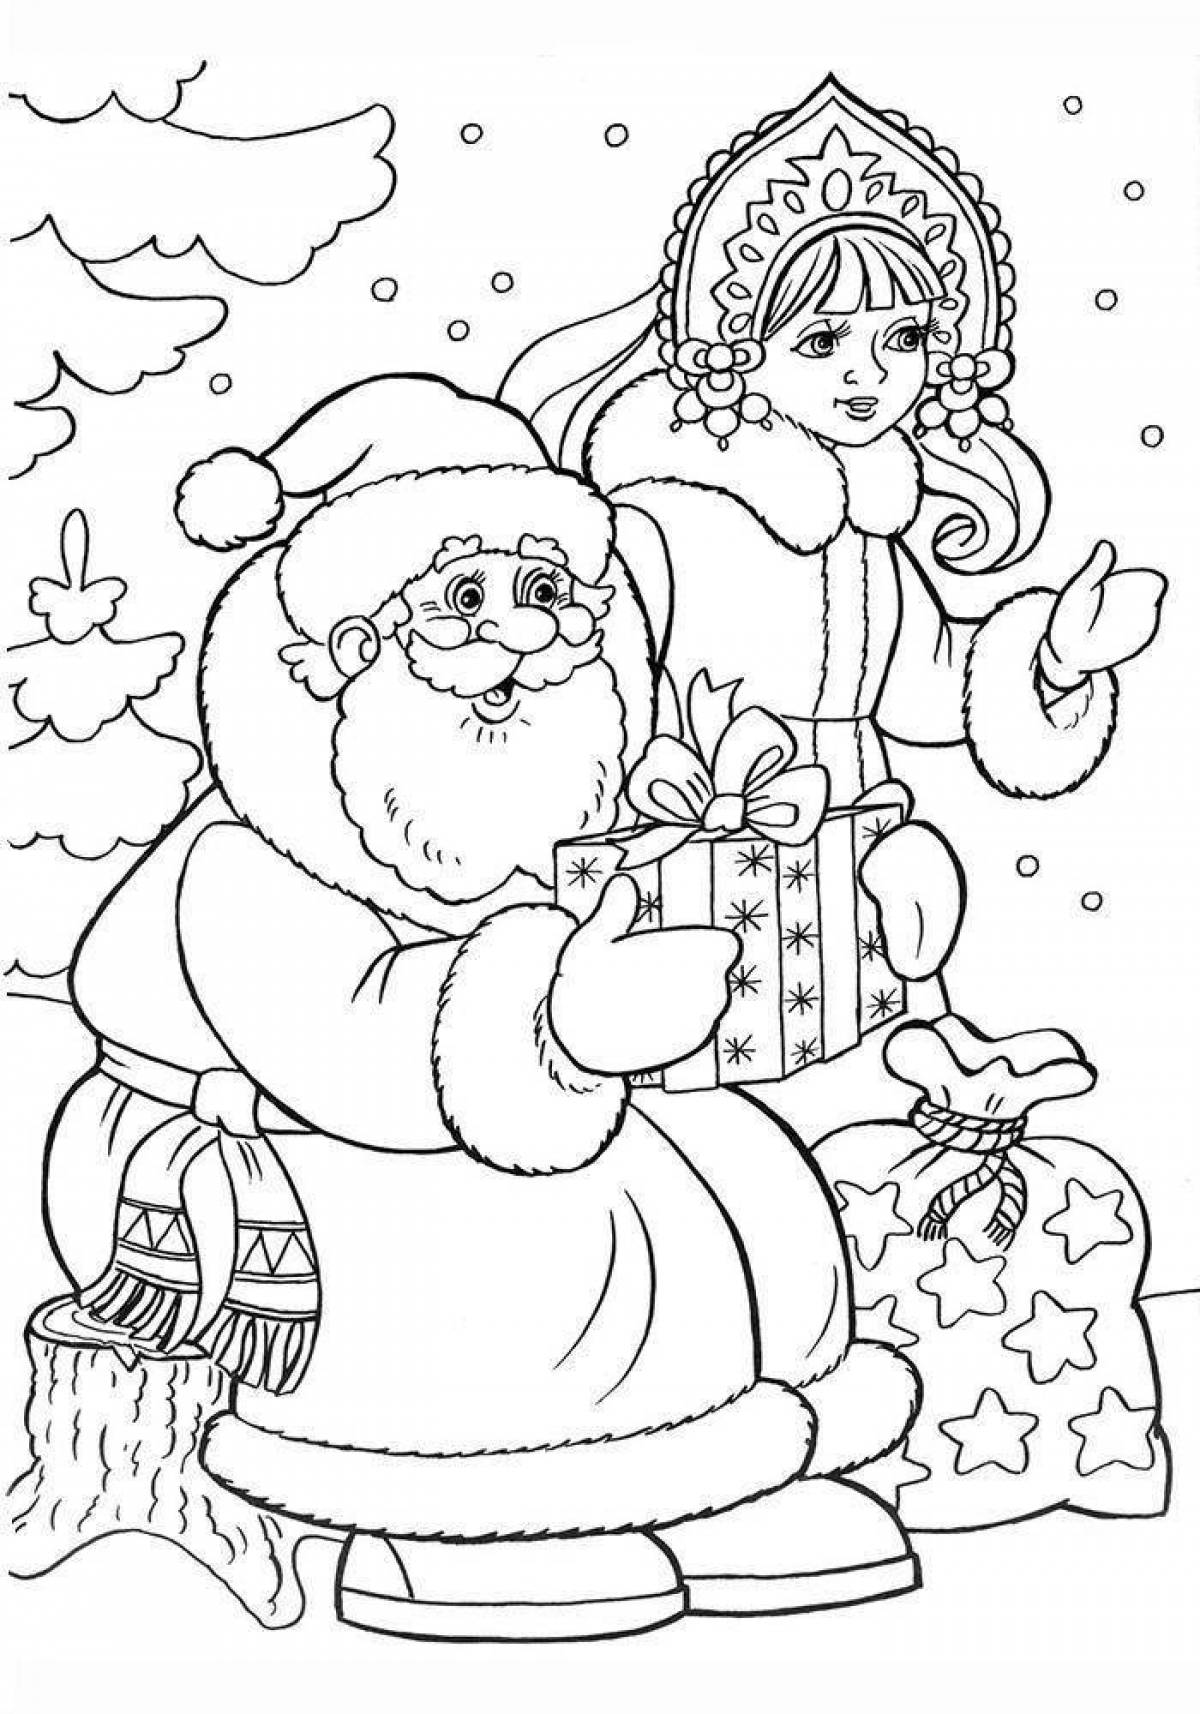 Joyful santa claus coloring pages for kids